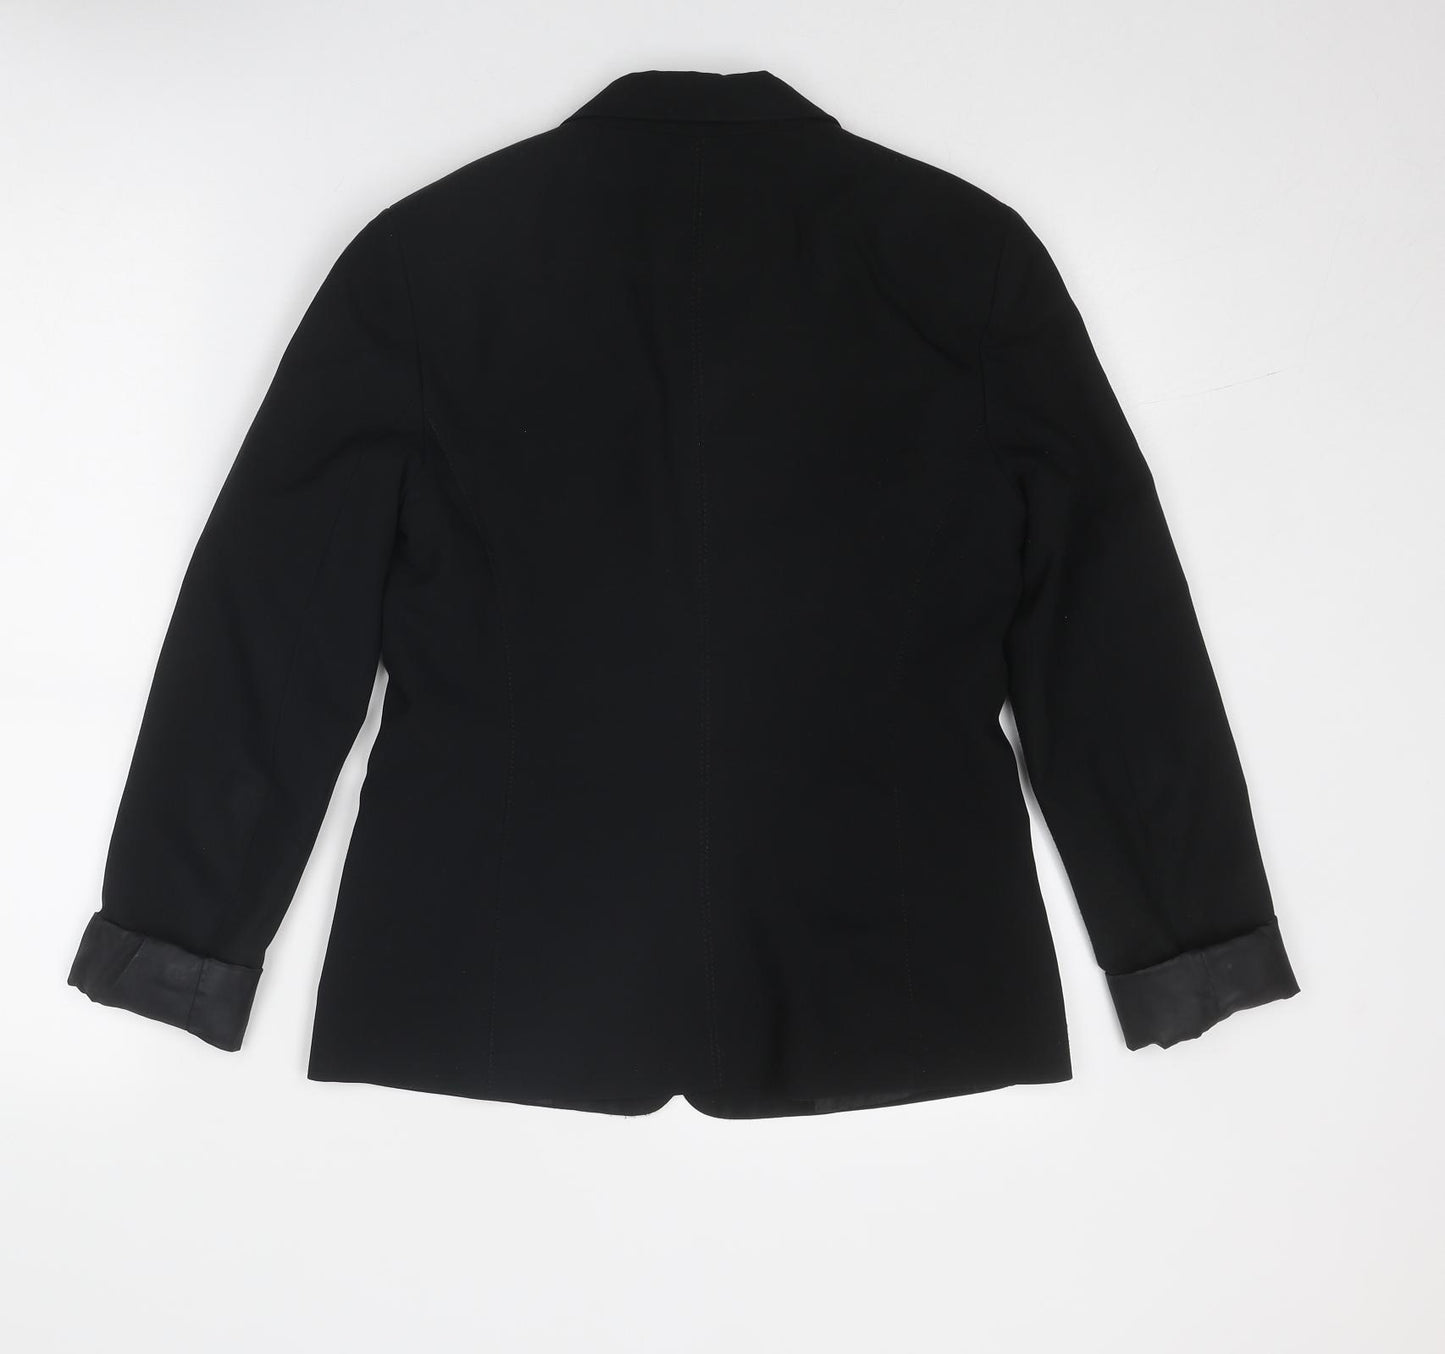 New Look Womens Black Polyester Jacket Blazer Size 10